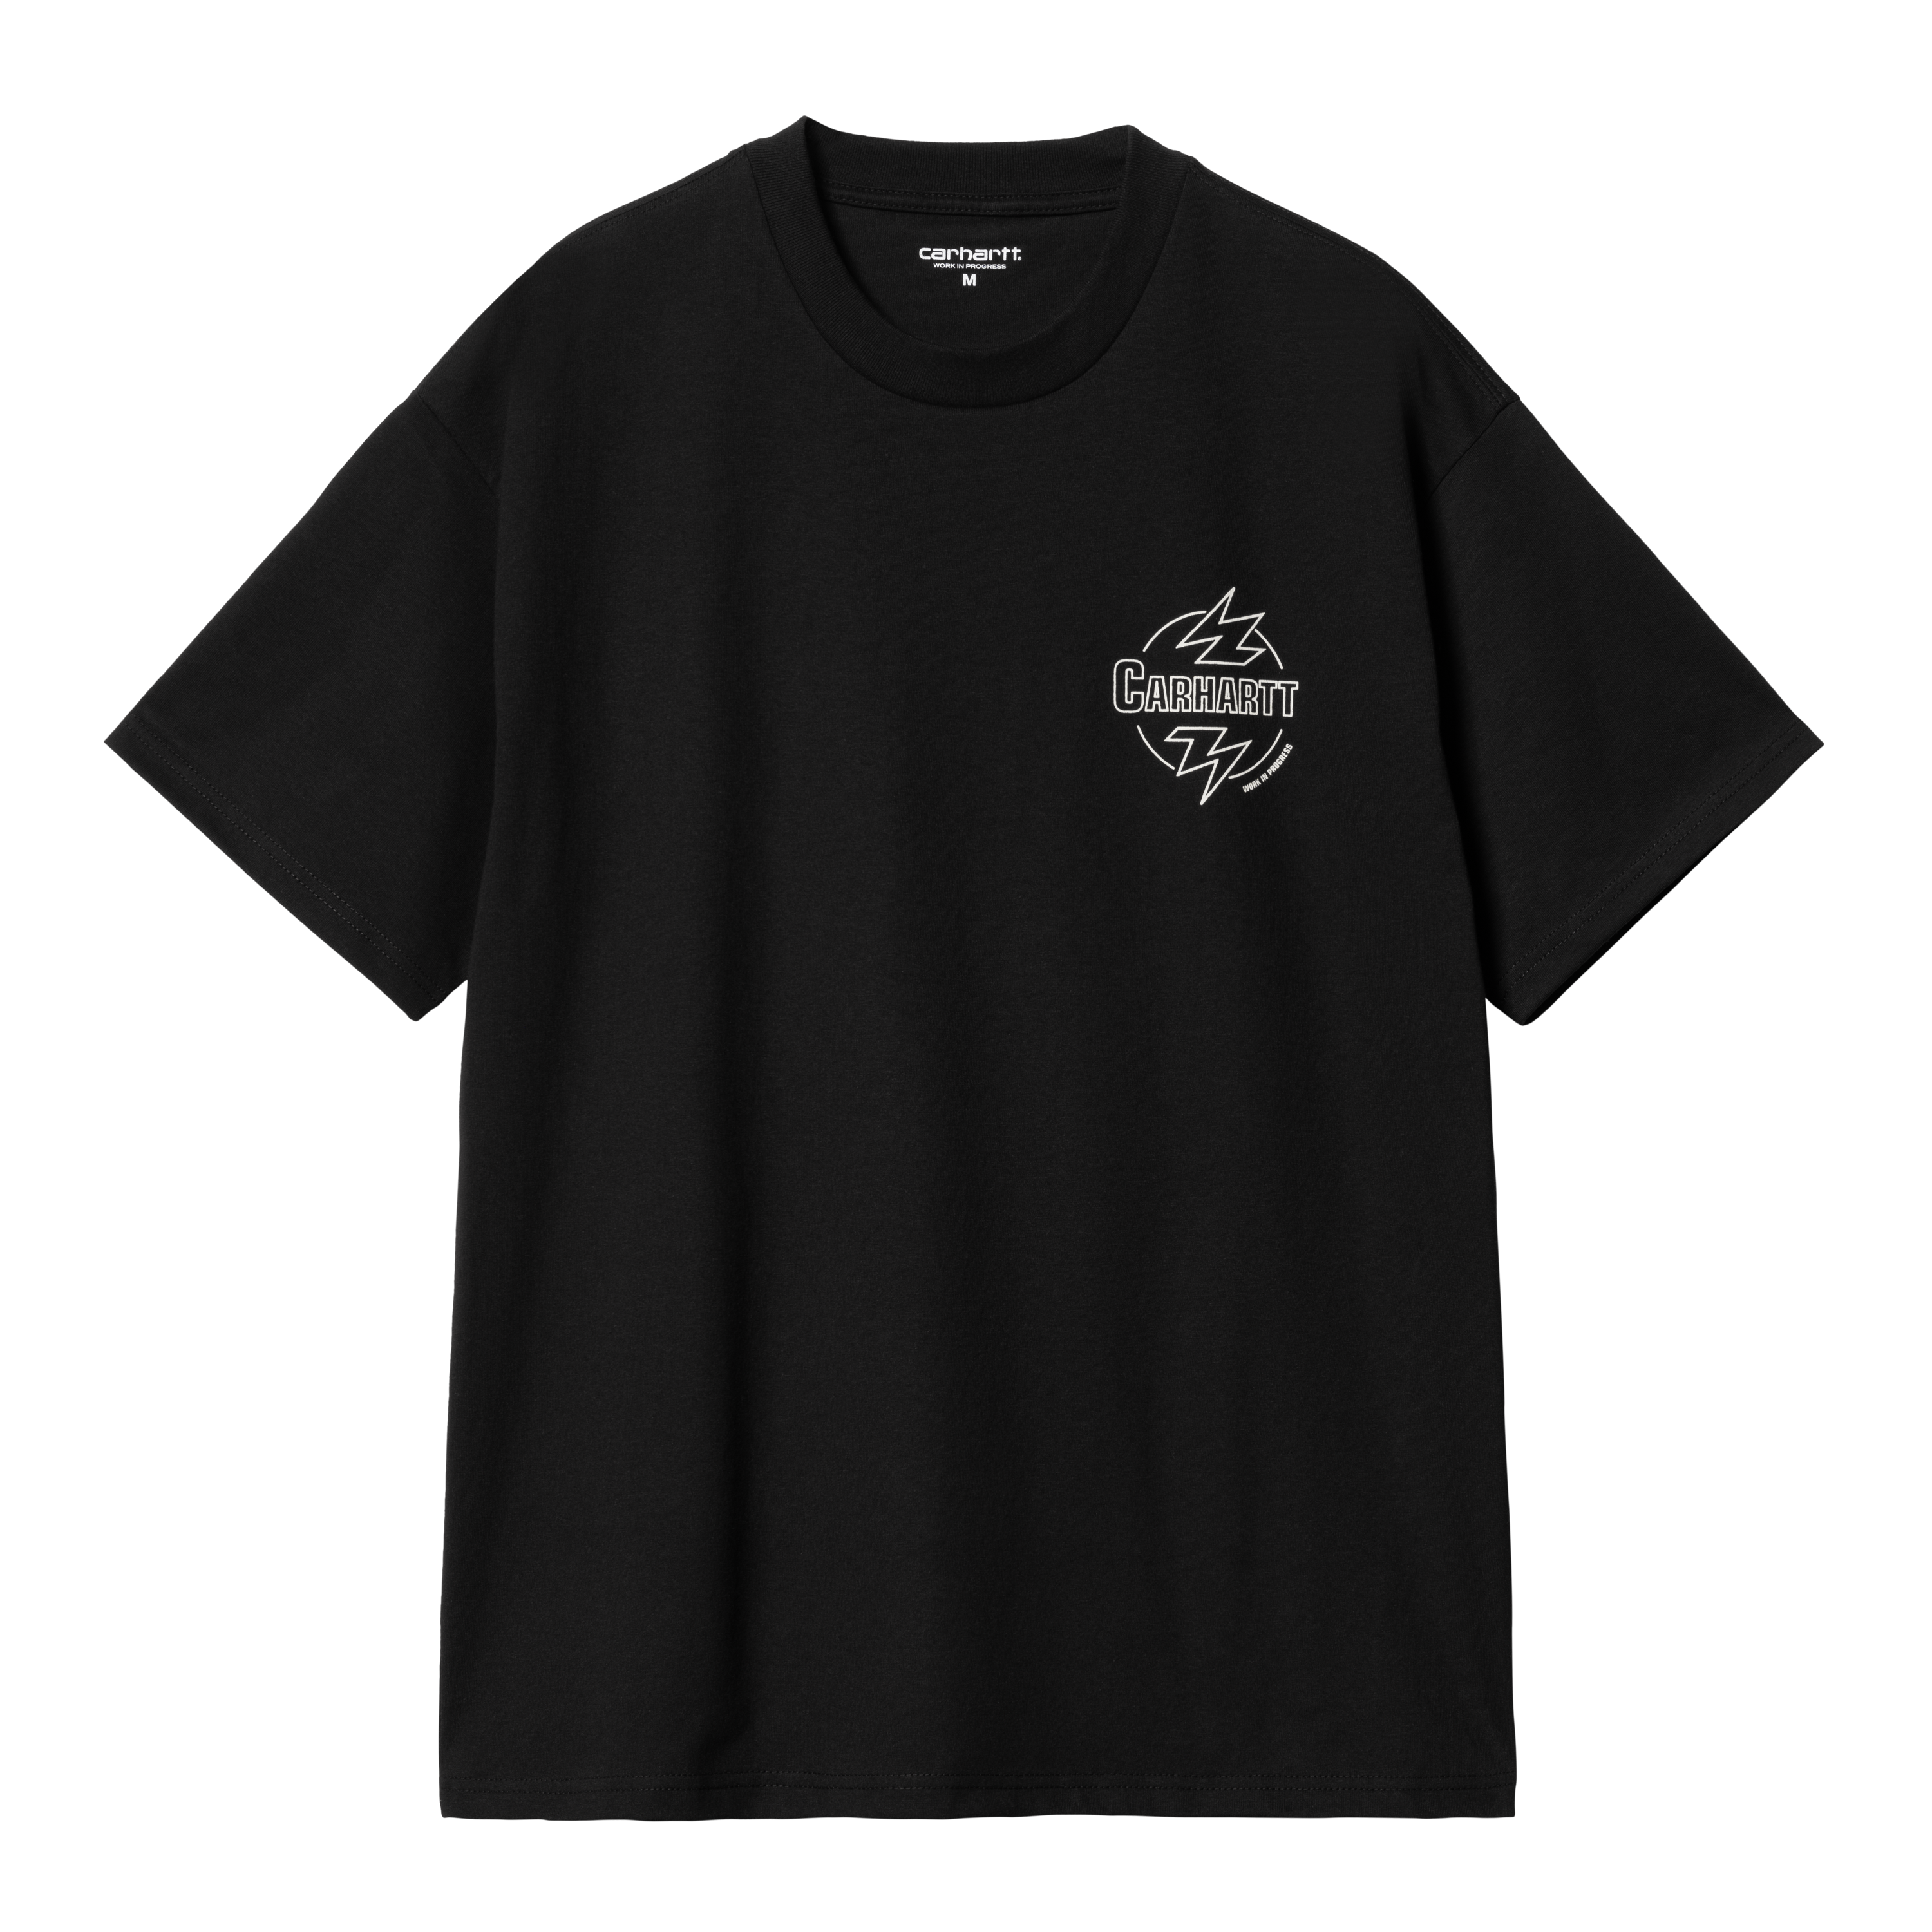 Carhartt WIP Short Sleeve Ablaze T-Shirt in Black